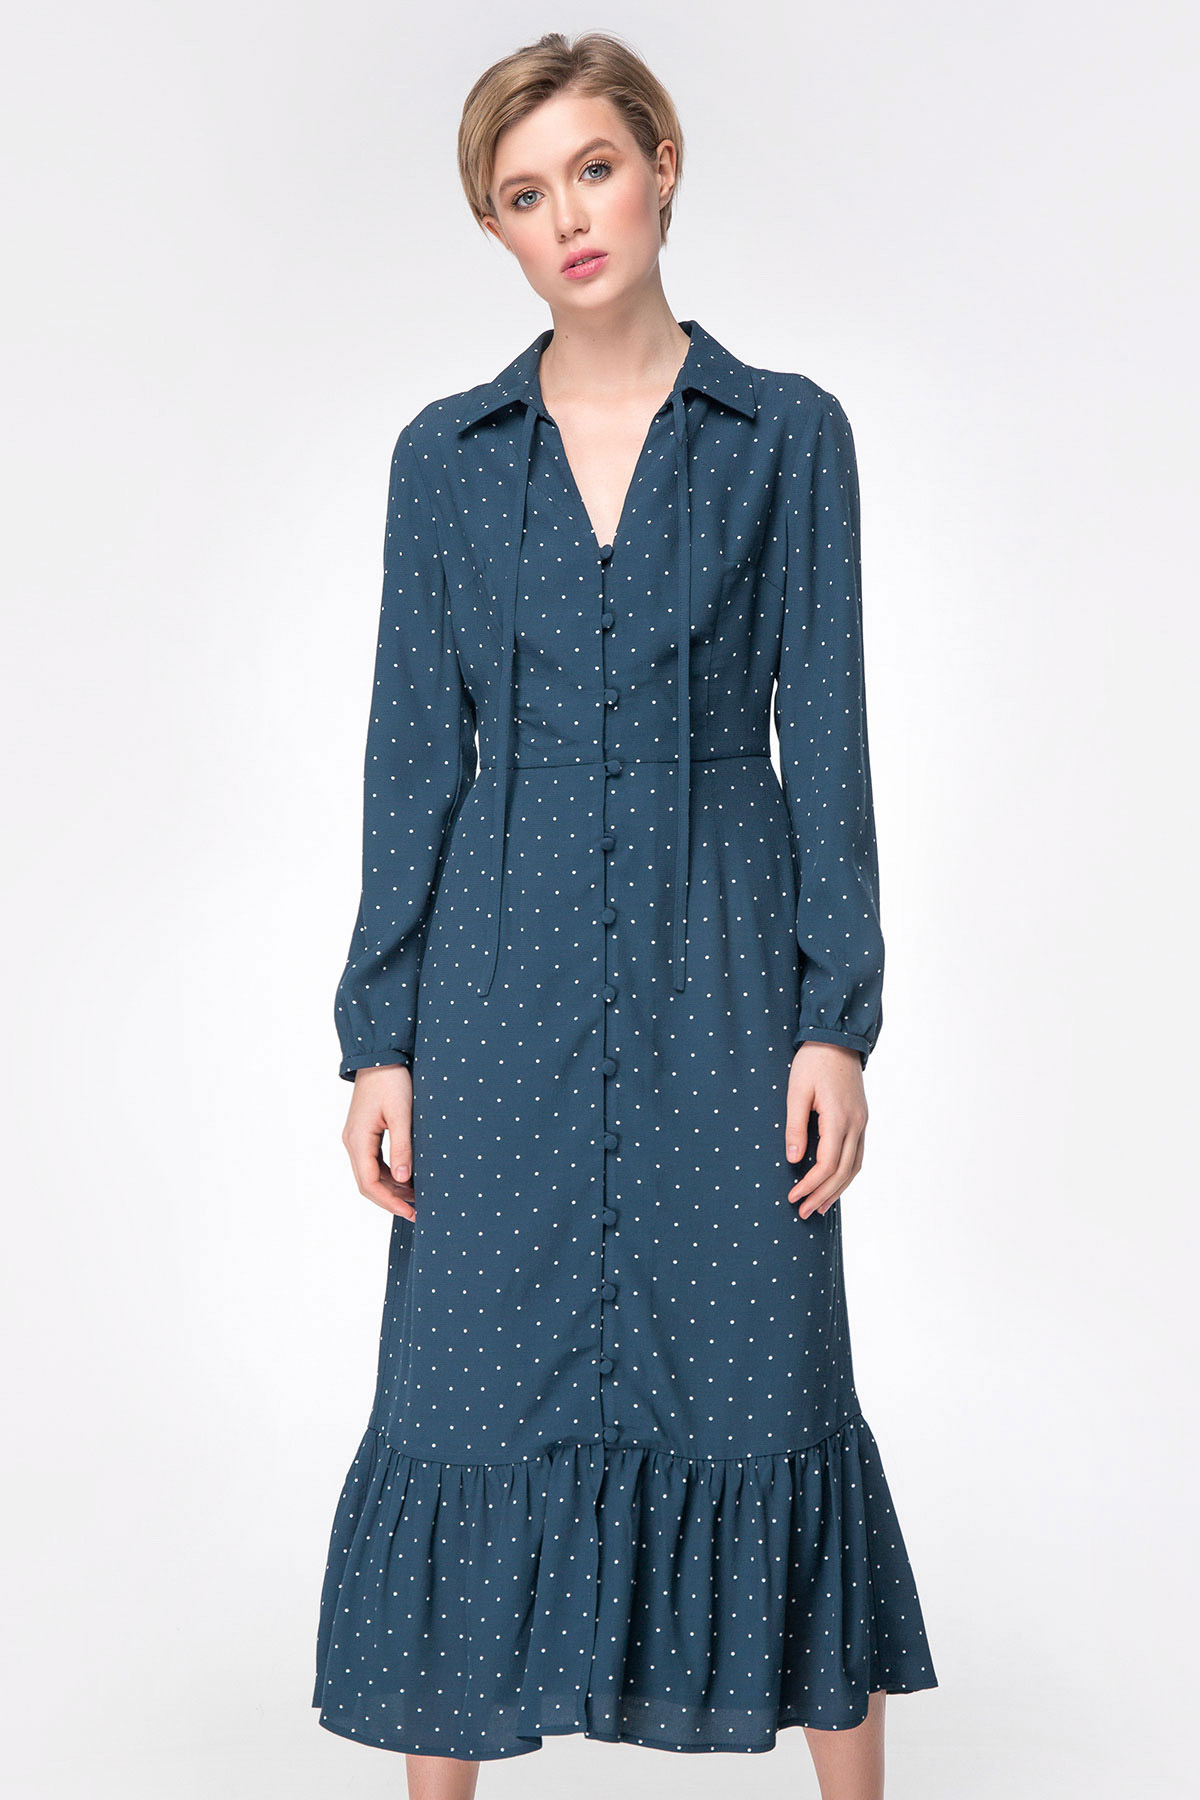 Dark-blue polka dot dress with pleats, photo 3